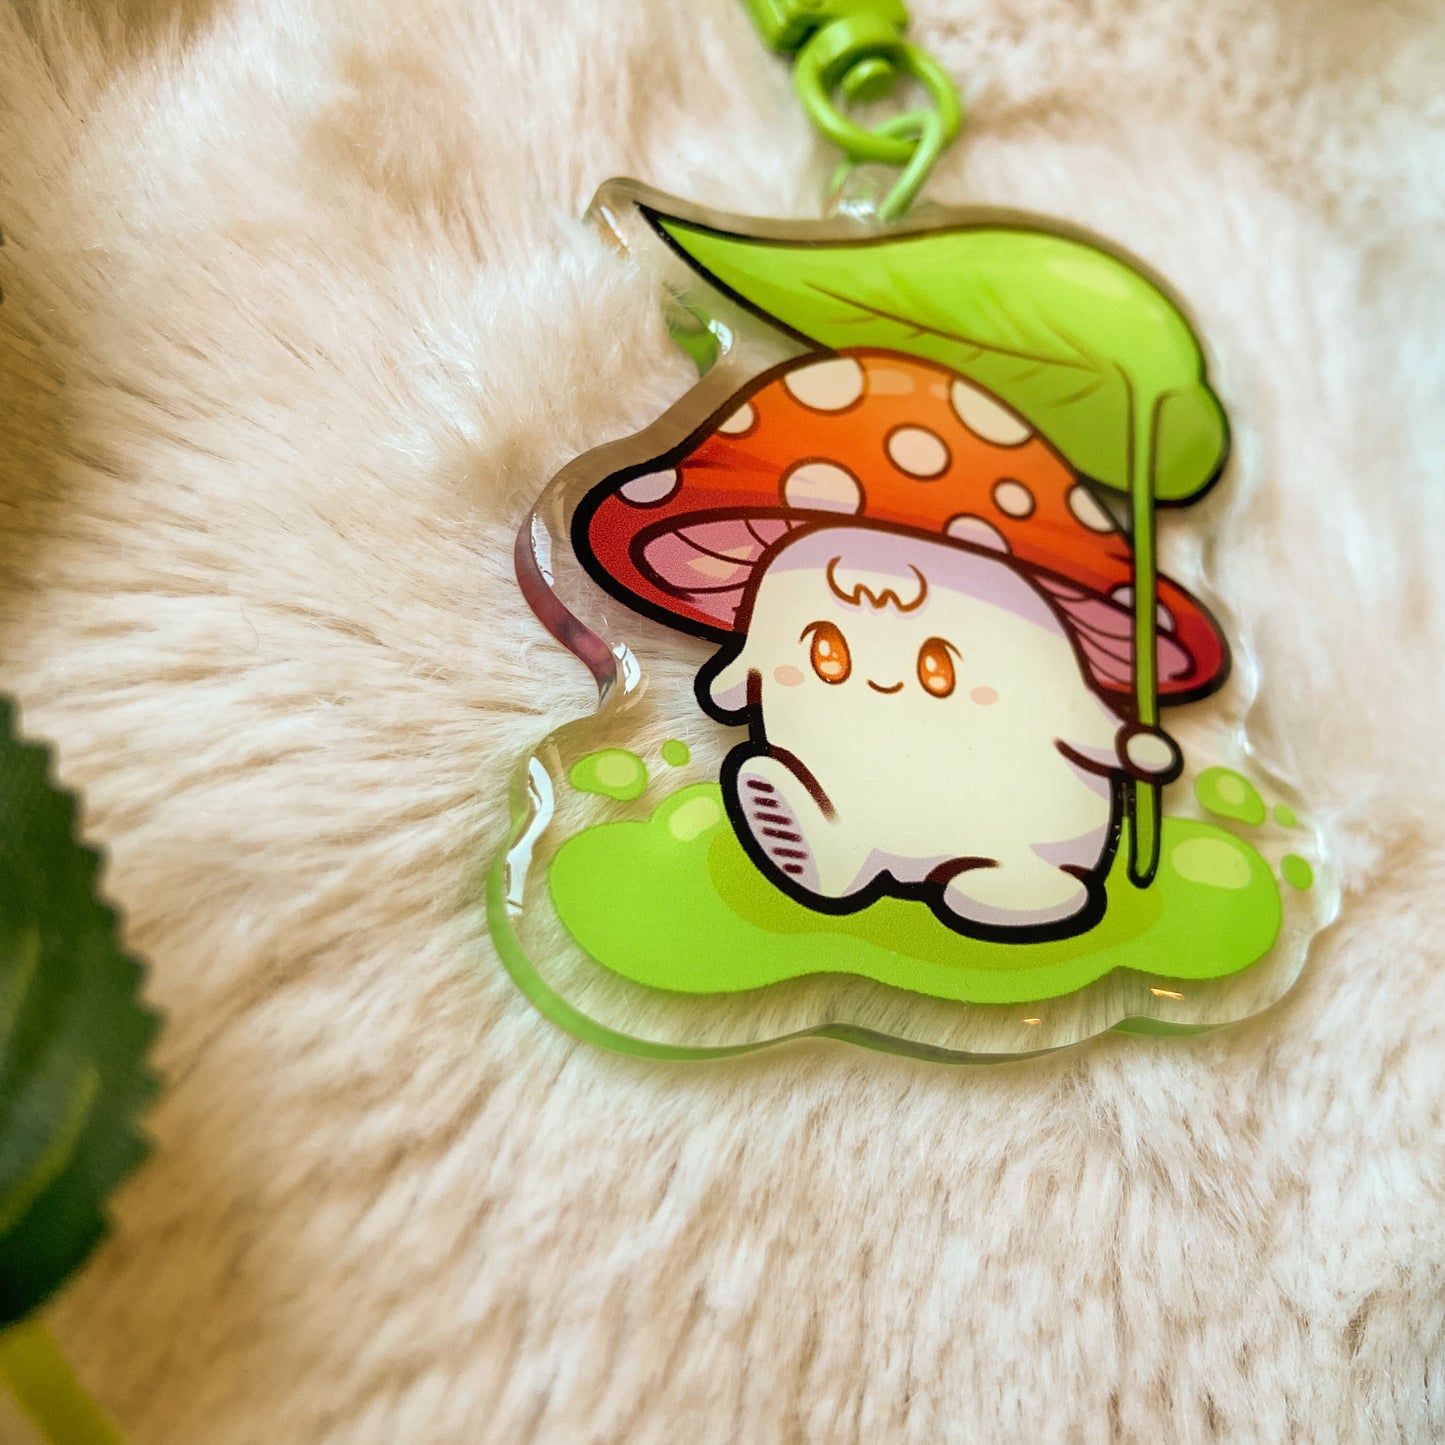 Mushroom acrylic charm